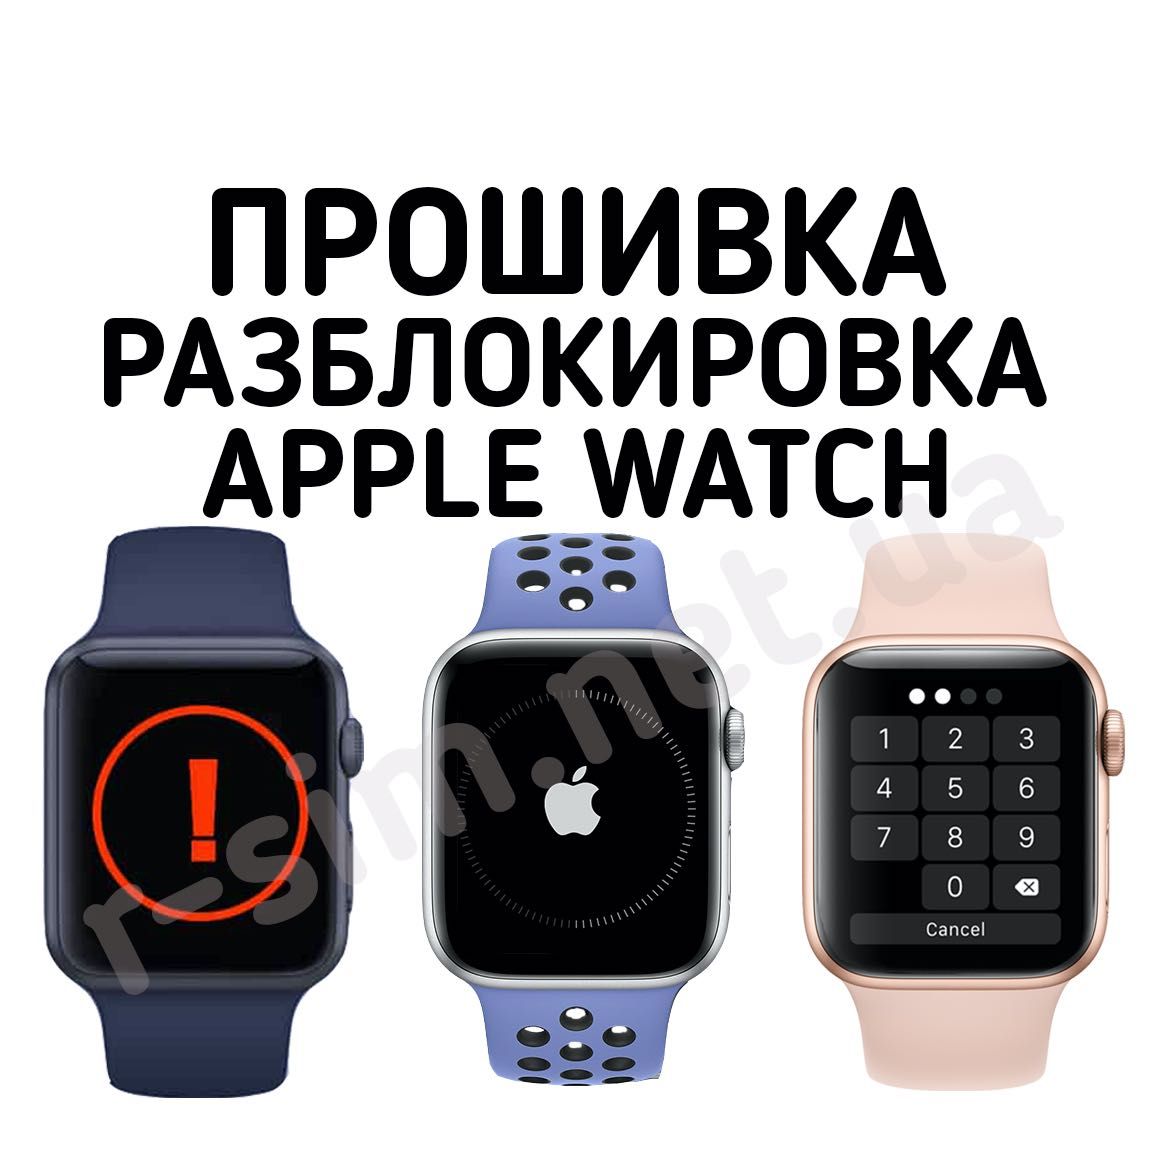 Прошивка разблокировка Apple Watch Series 1 2 3 4 5 6 удаление iCloud